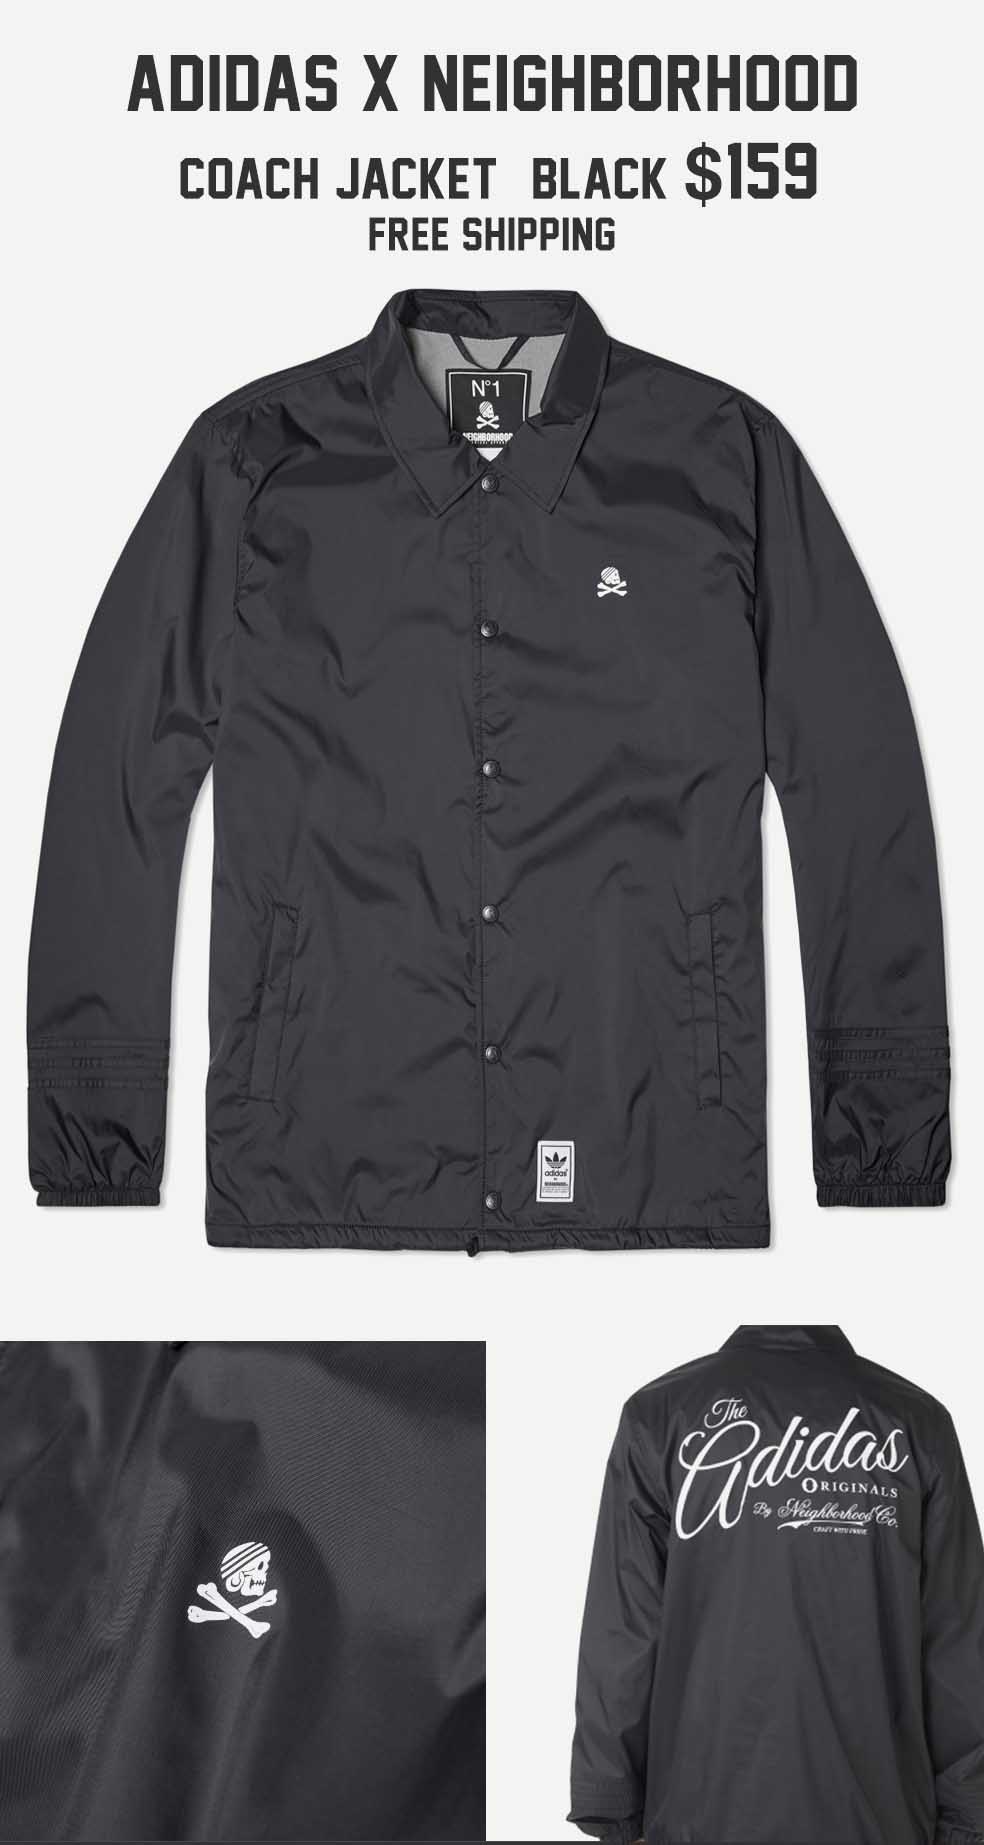 Stefan's Head - Fall Jackets Collection - Adidas x Neighborhood Coach Jacket